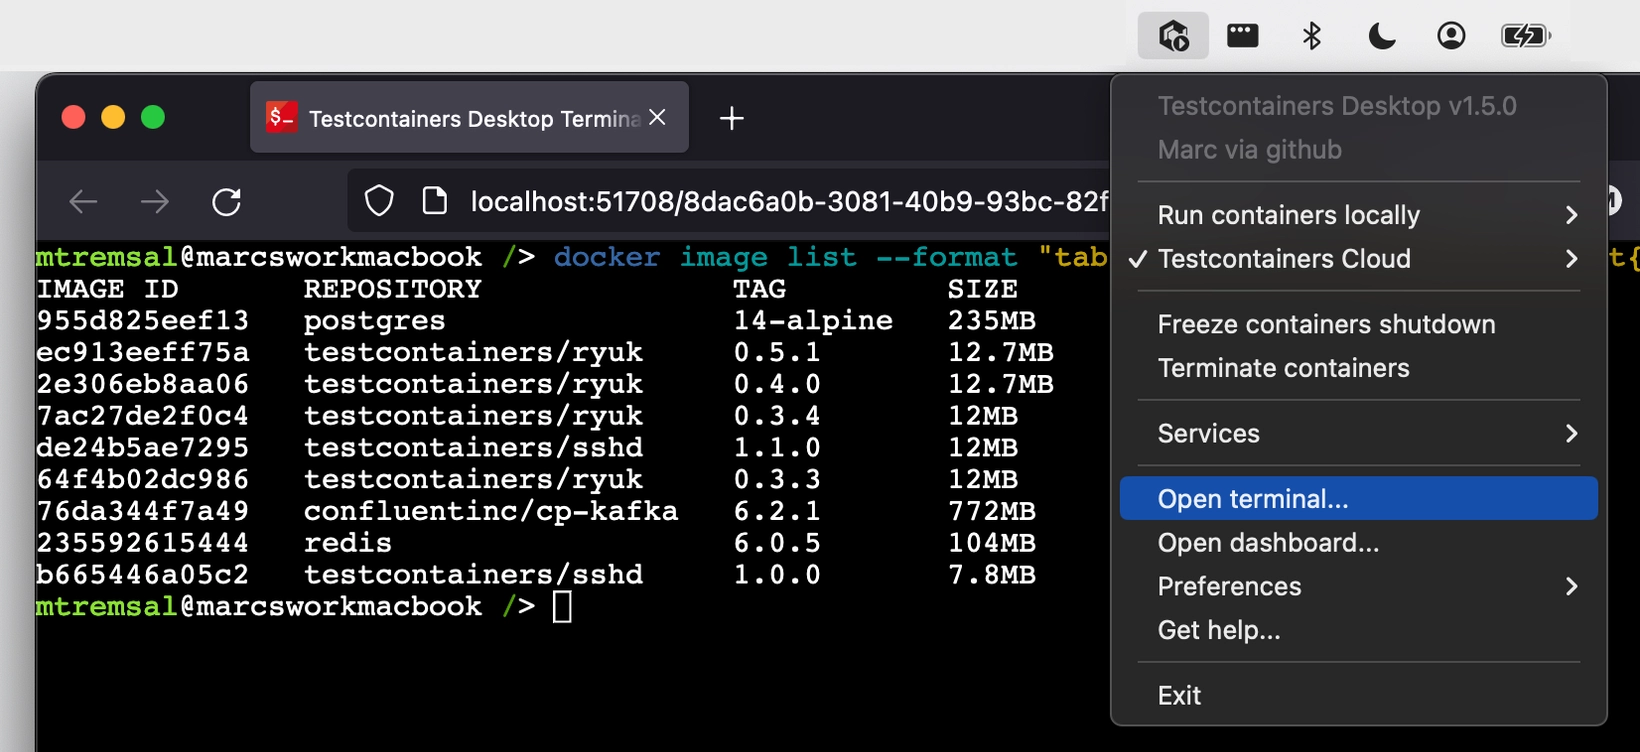 Testcontainers Desktop Open Terminal